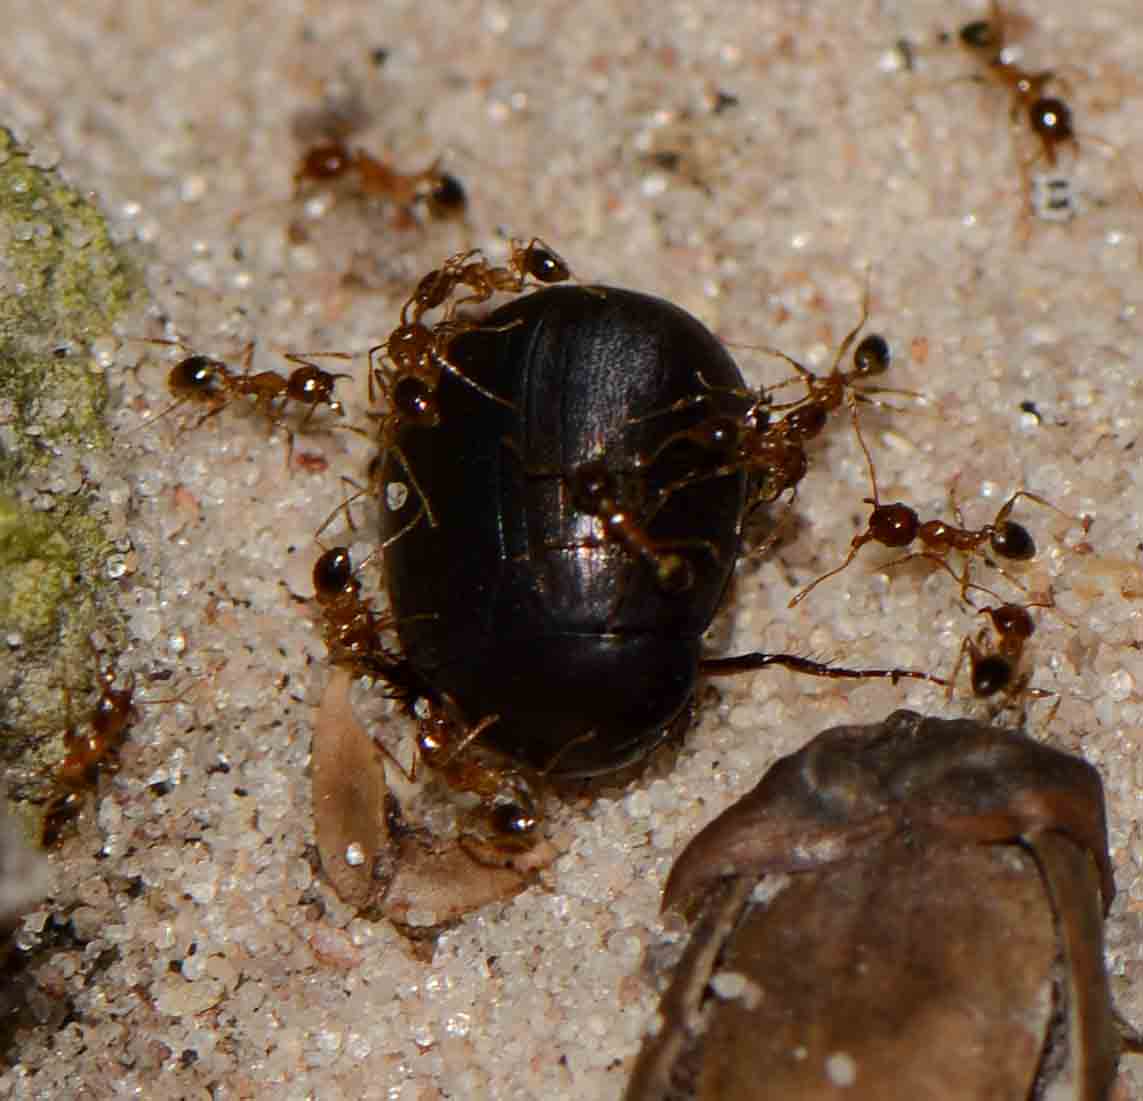 Ants hunting Beetle